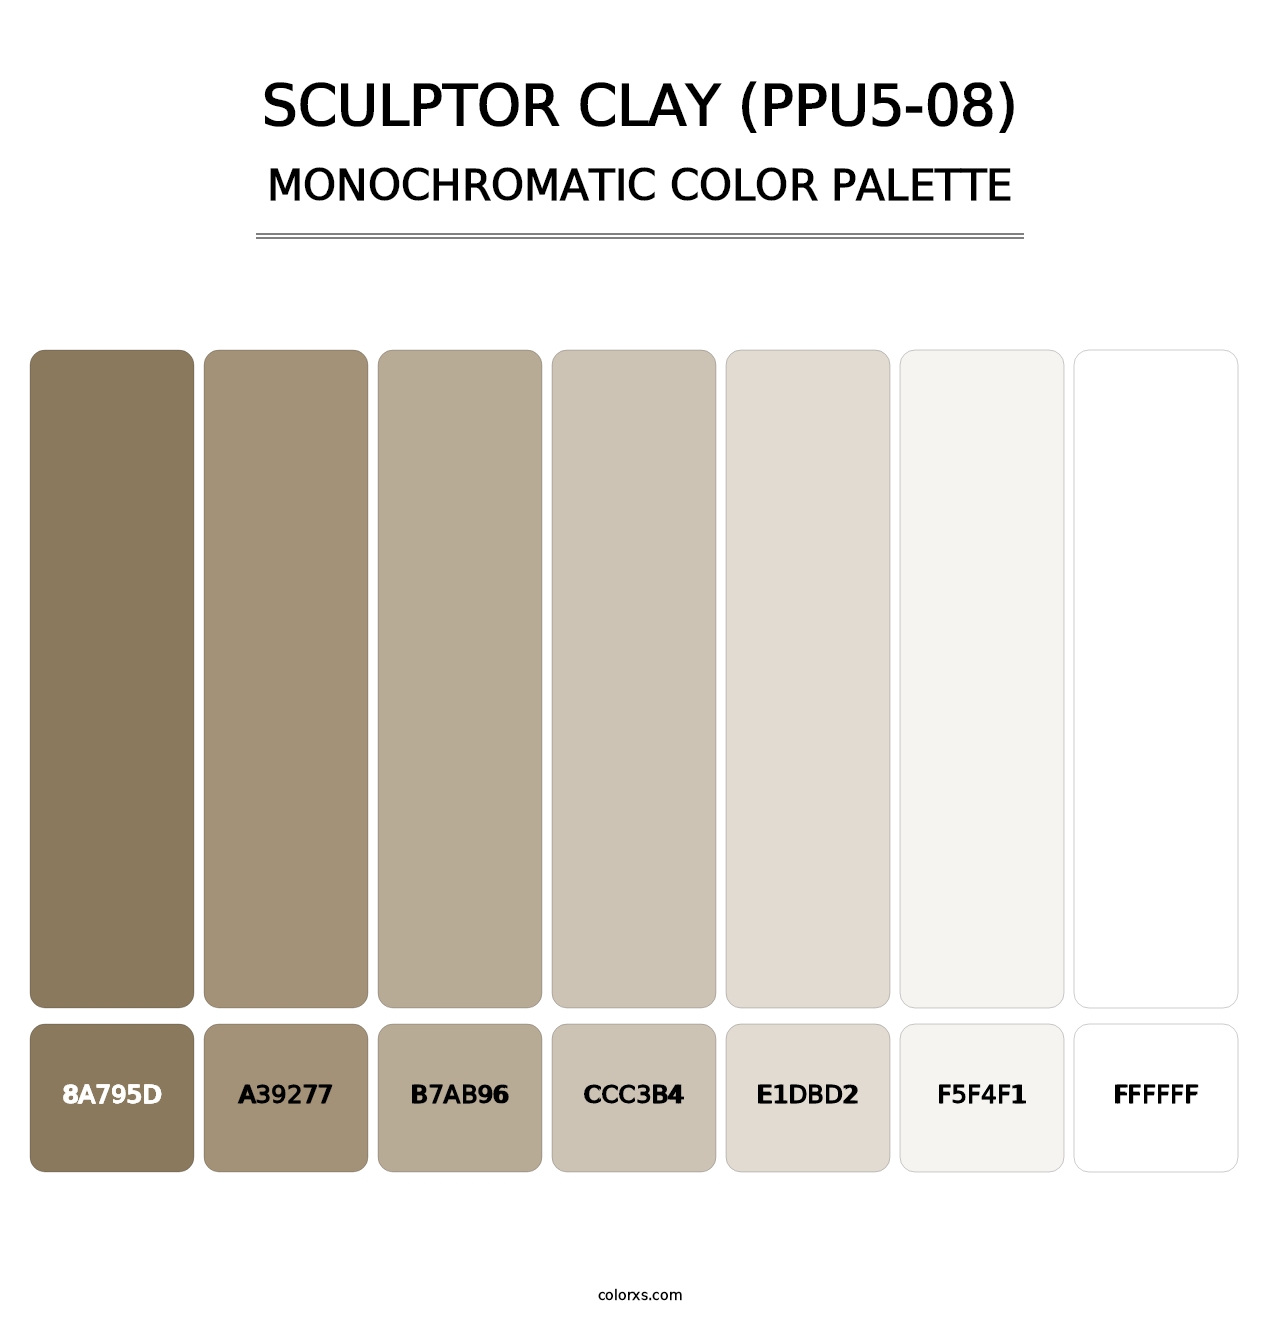 Sculptor Clay (PPU5-08) - Monochromatic Color Palette